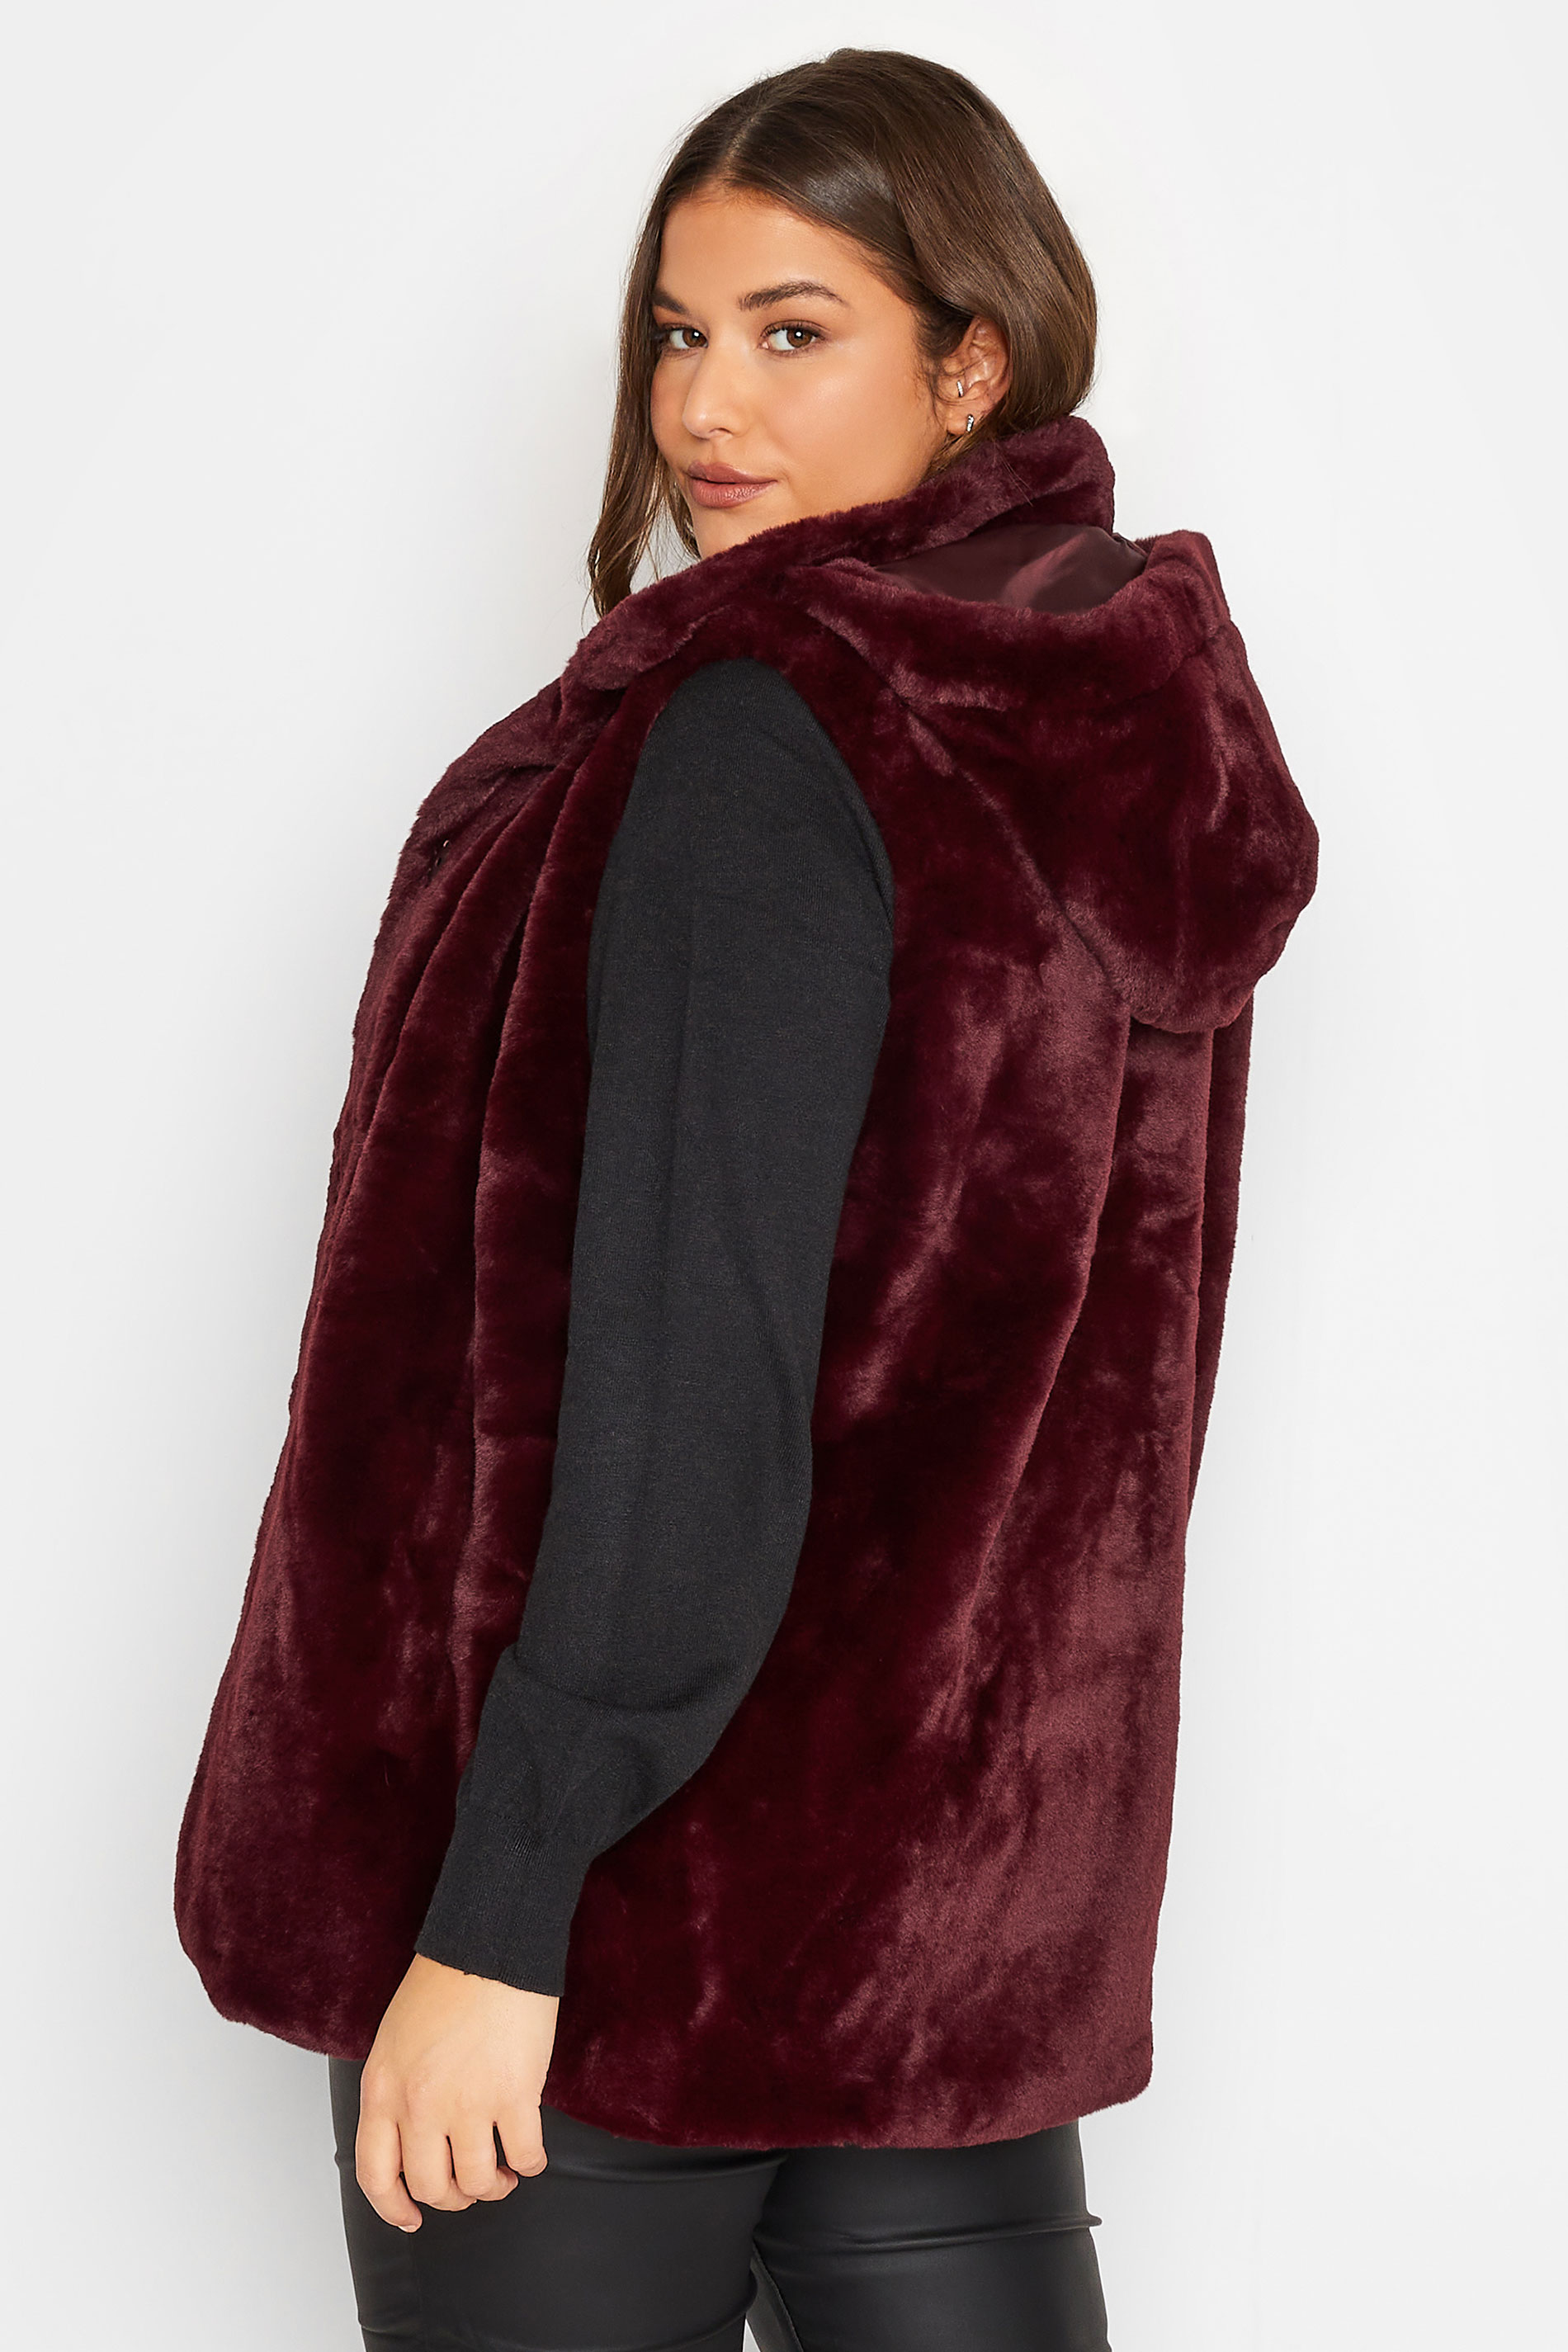 LTS Tall Women's Dark Red Faux Fur Hooded Gilet | Long Tall Sally 3